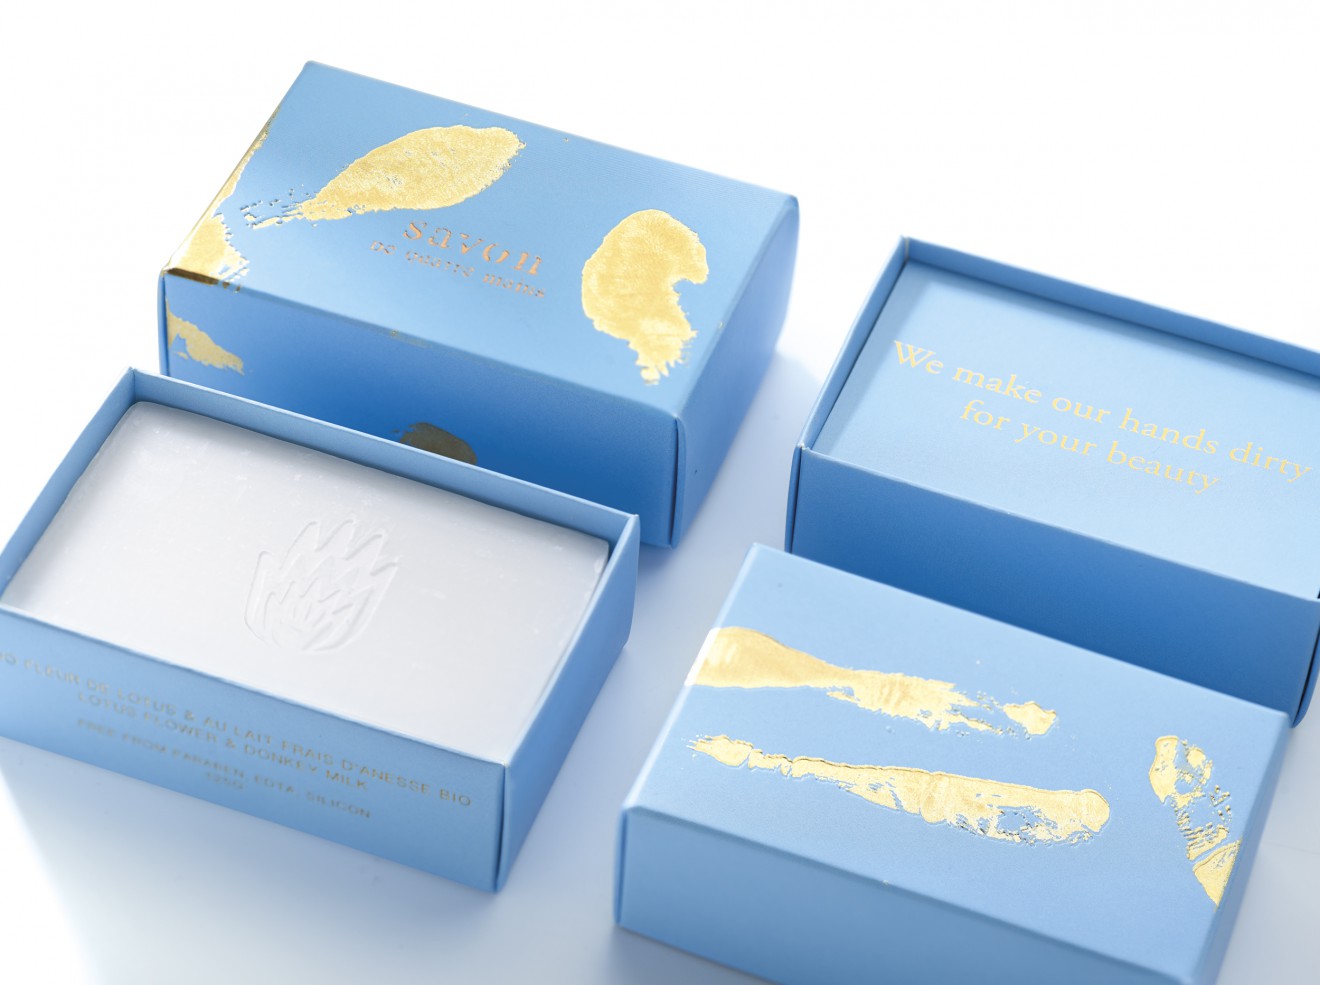 Quatre Mains package design - self promotion, savon, packaging